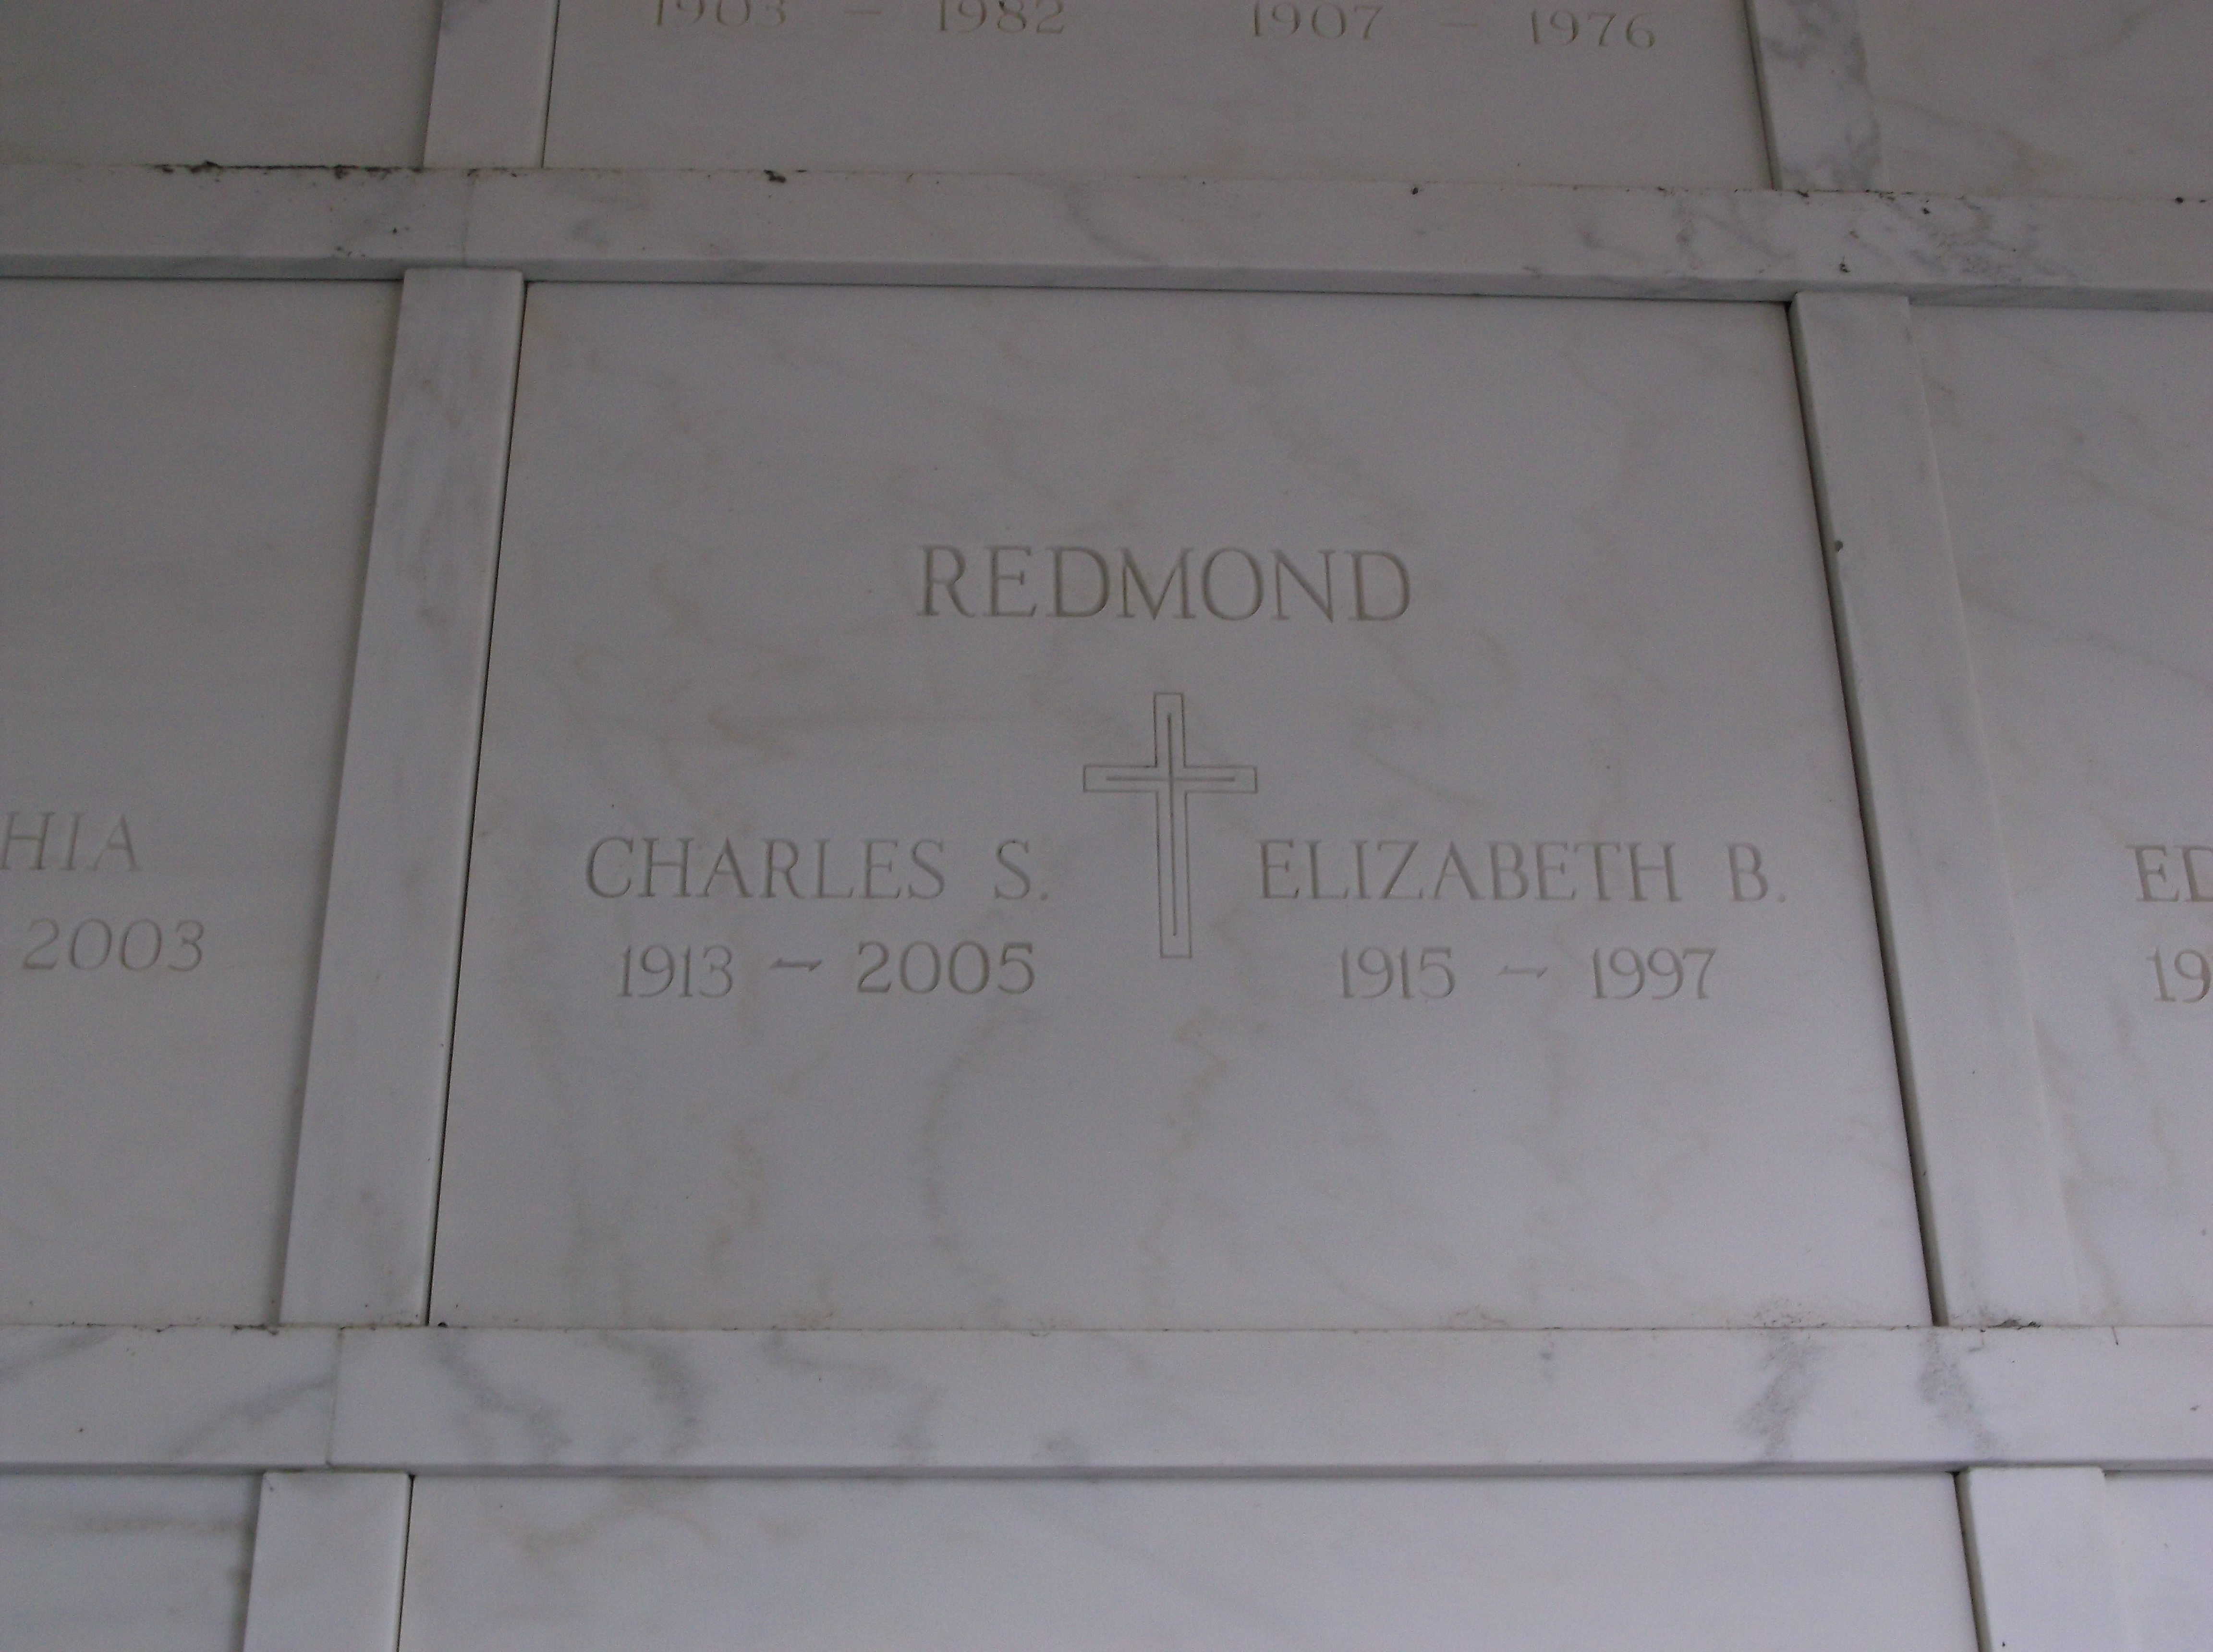 Charles S Redmond